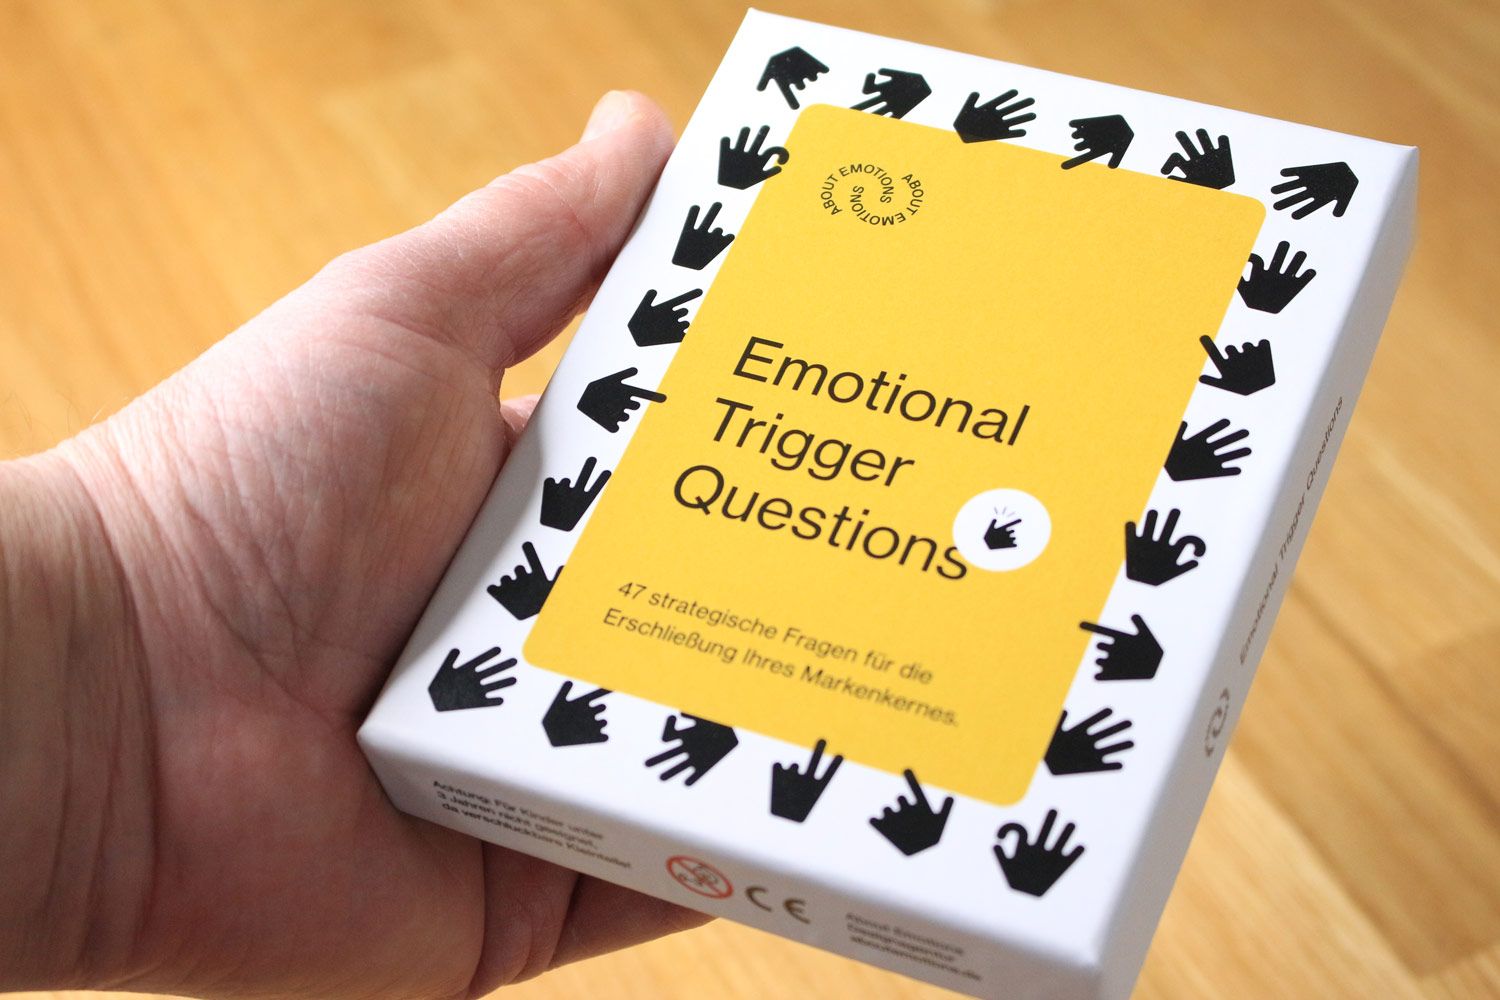 about-emotions_designagentur-recklinghausen_emotional-brand-strategy-workshop_trigger-questions-packaging_001.jpg